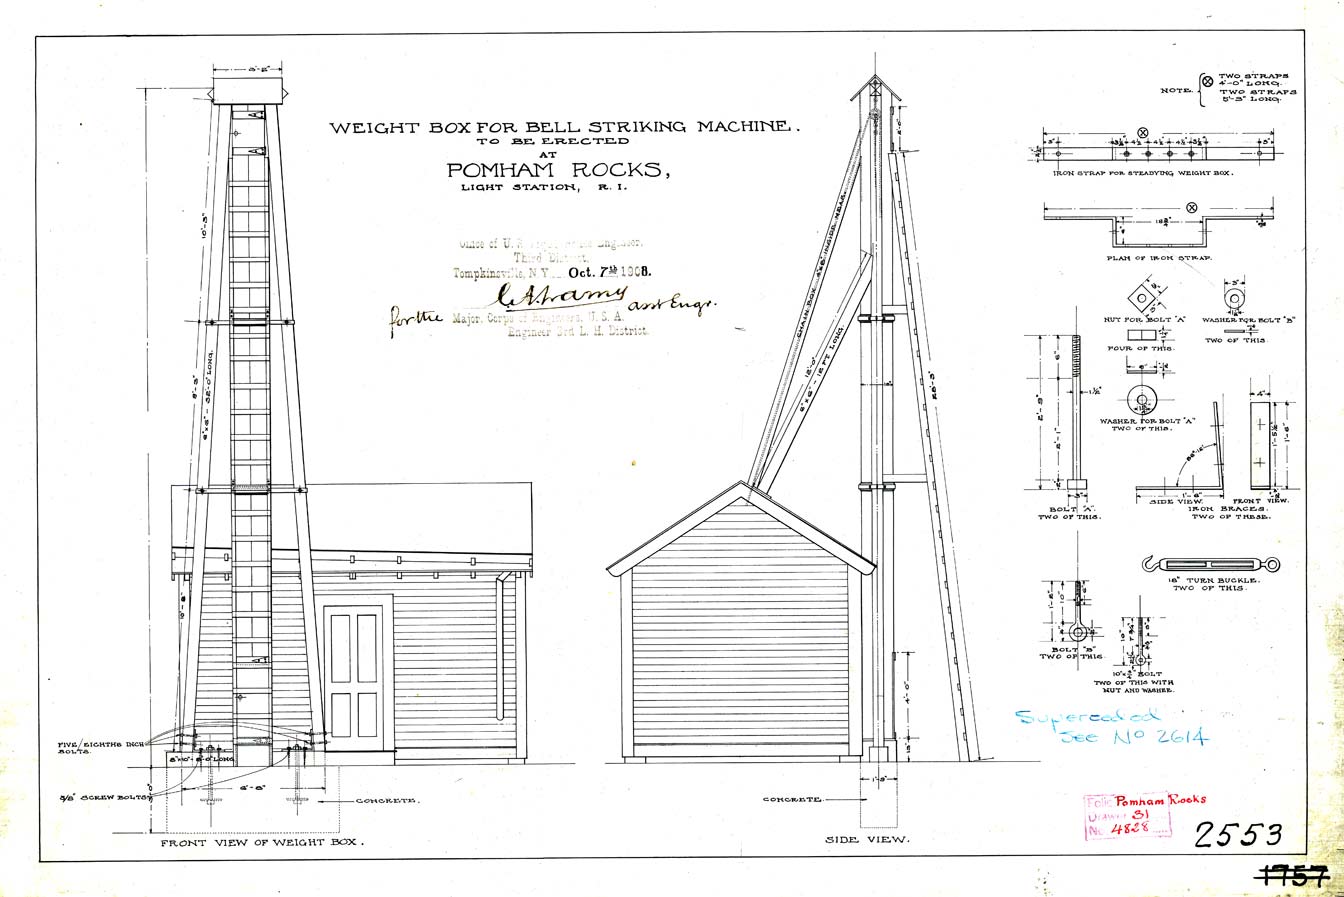  Pomham Rocks Light Station Weight Box for Bell Striking Machine  - No. 2553 - 1908